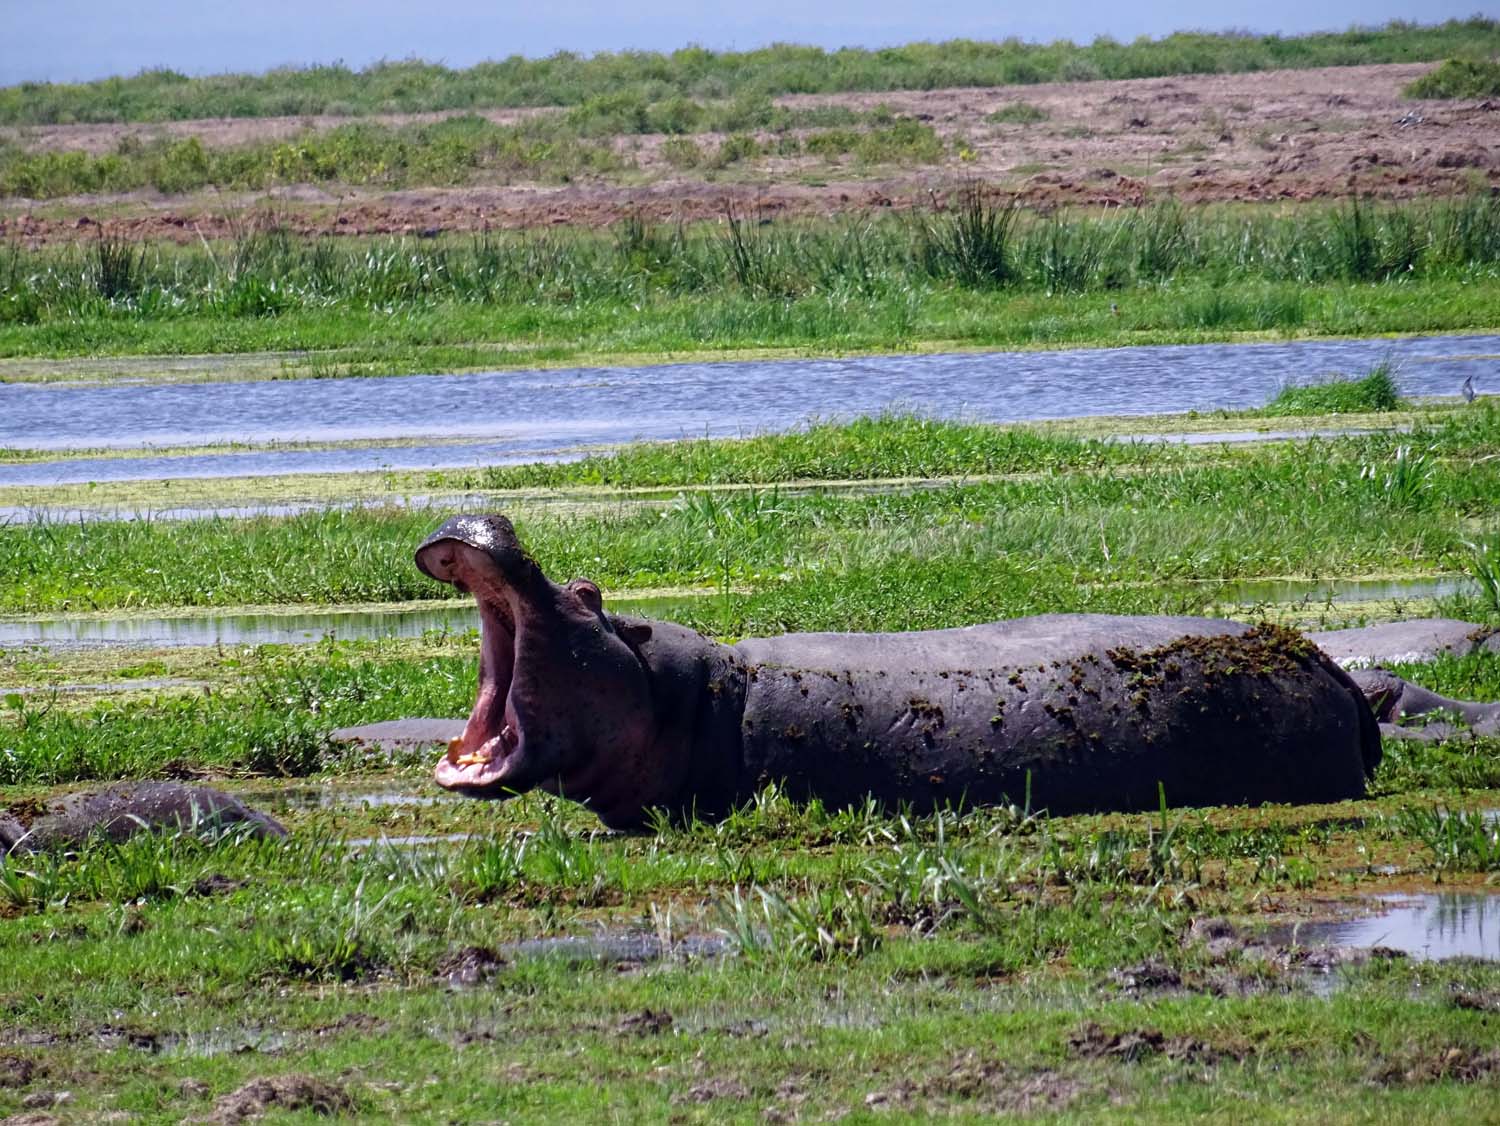 hippo yawn (Amboseli)